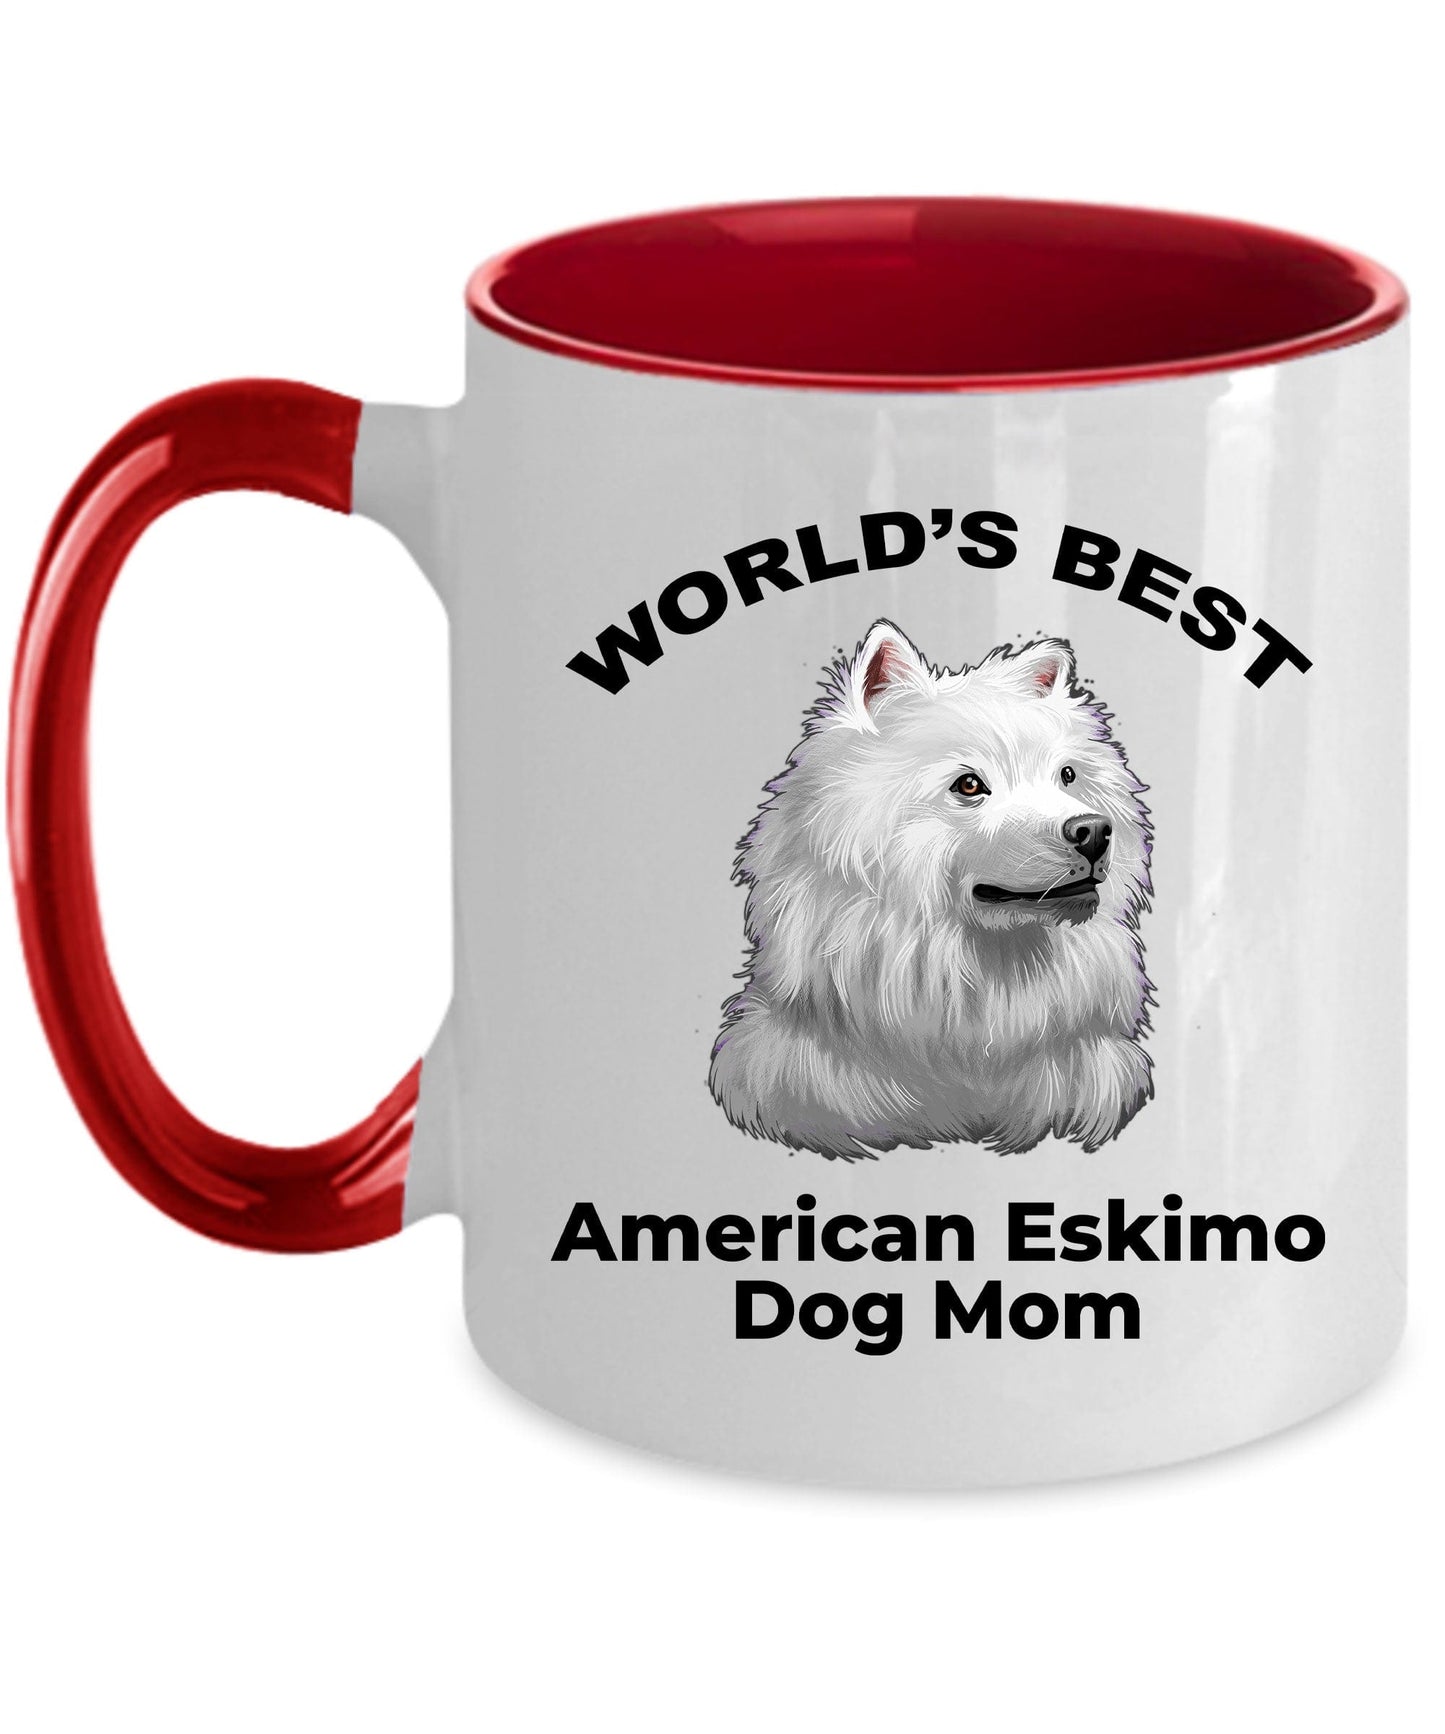 Best Ever American Eskimo Dog Mom Ceramic Coffee Mug